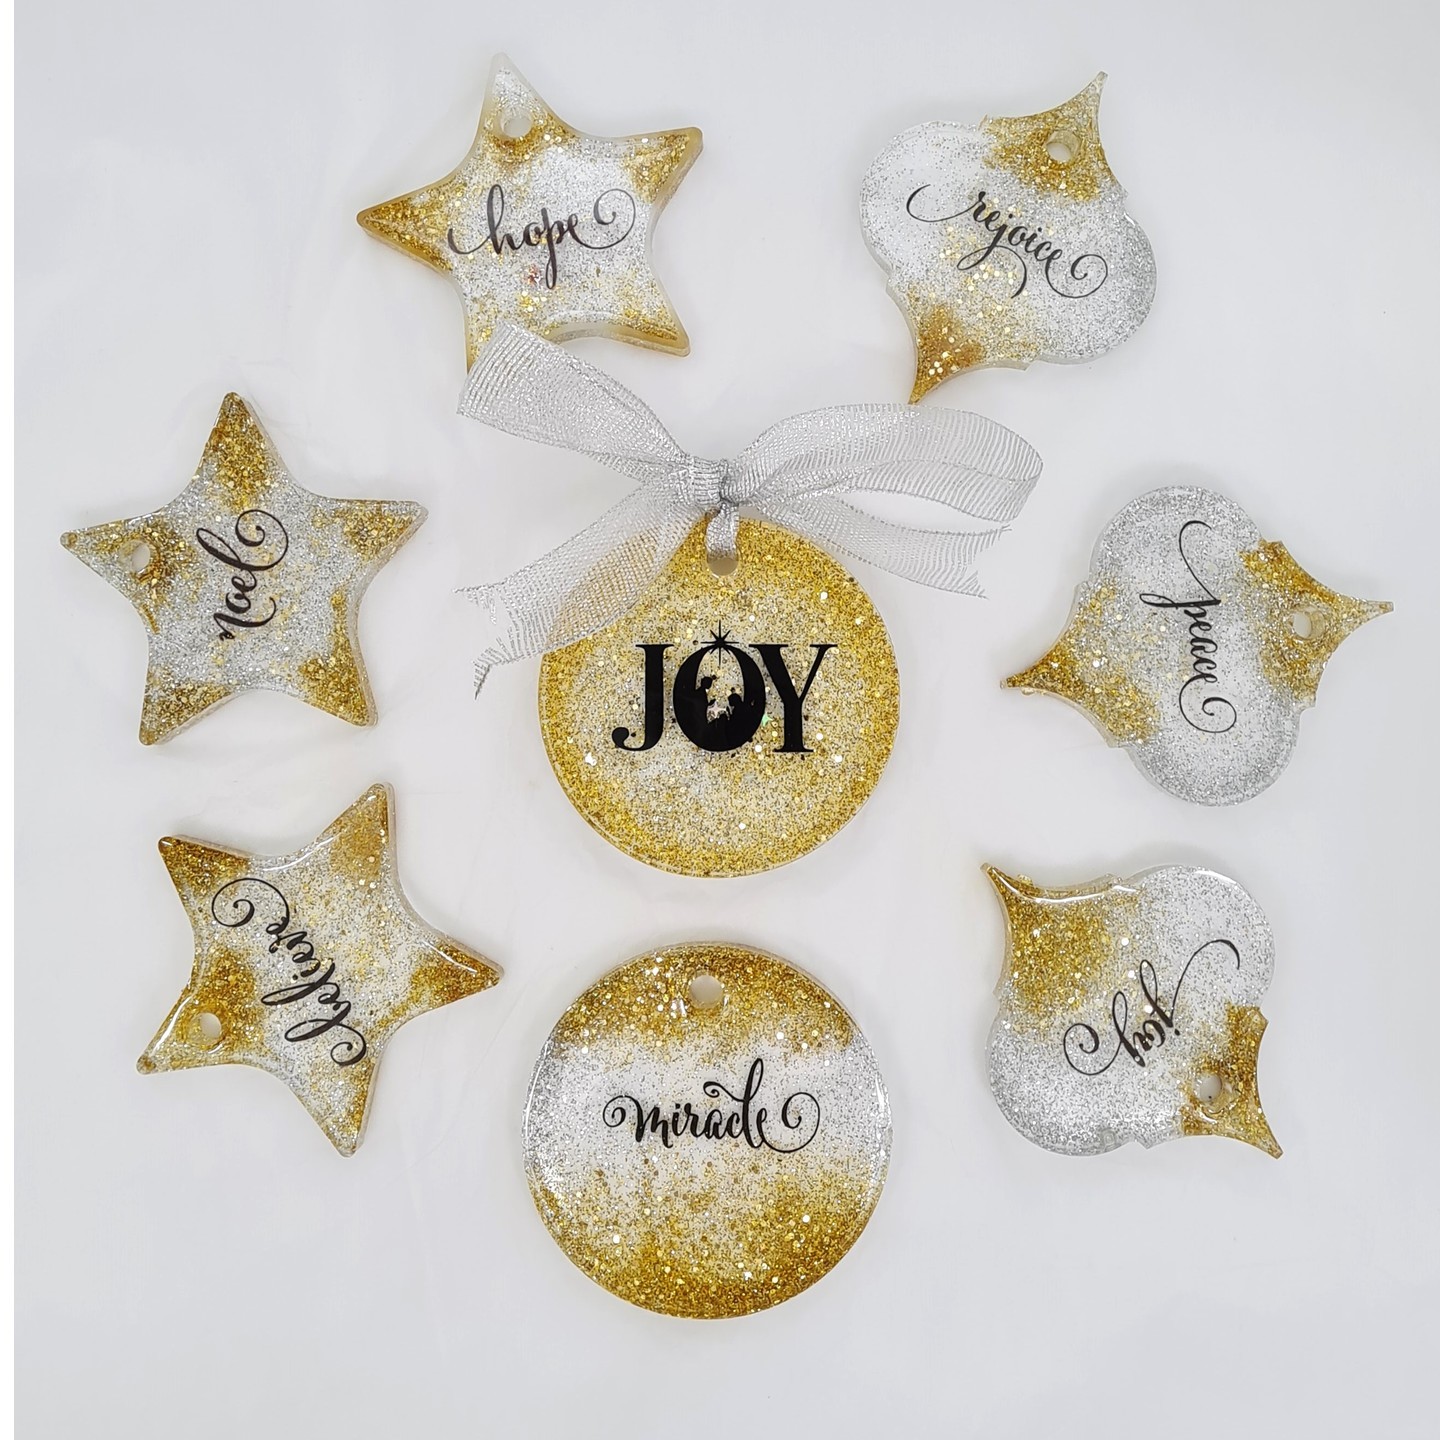 PRECIOUS 2- Set of 15  Christmas Tree Ornament Gold & Silver Glitter  PRE-ORDER